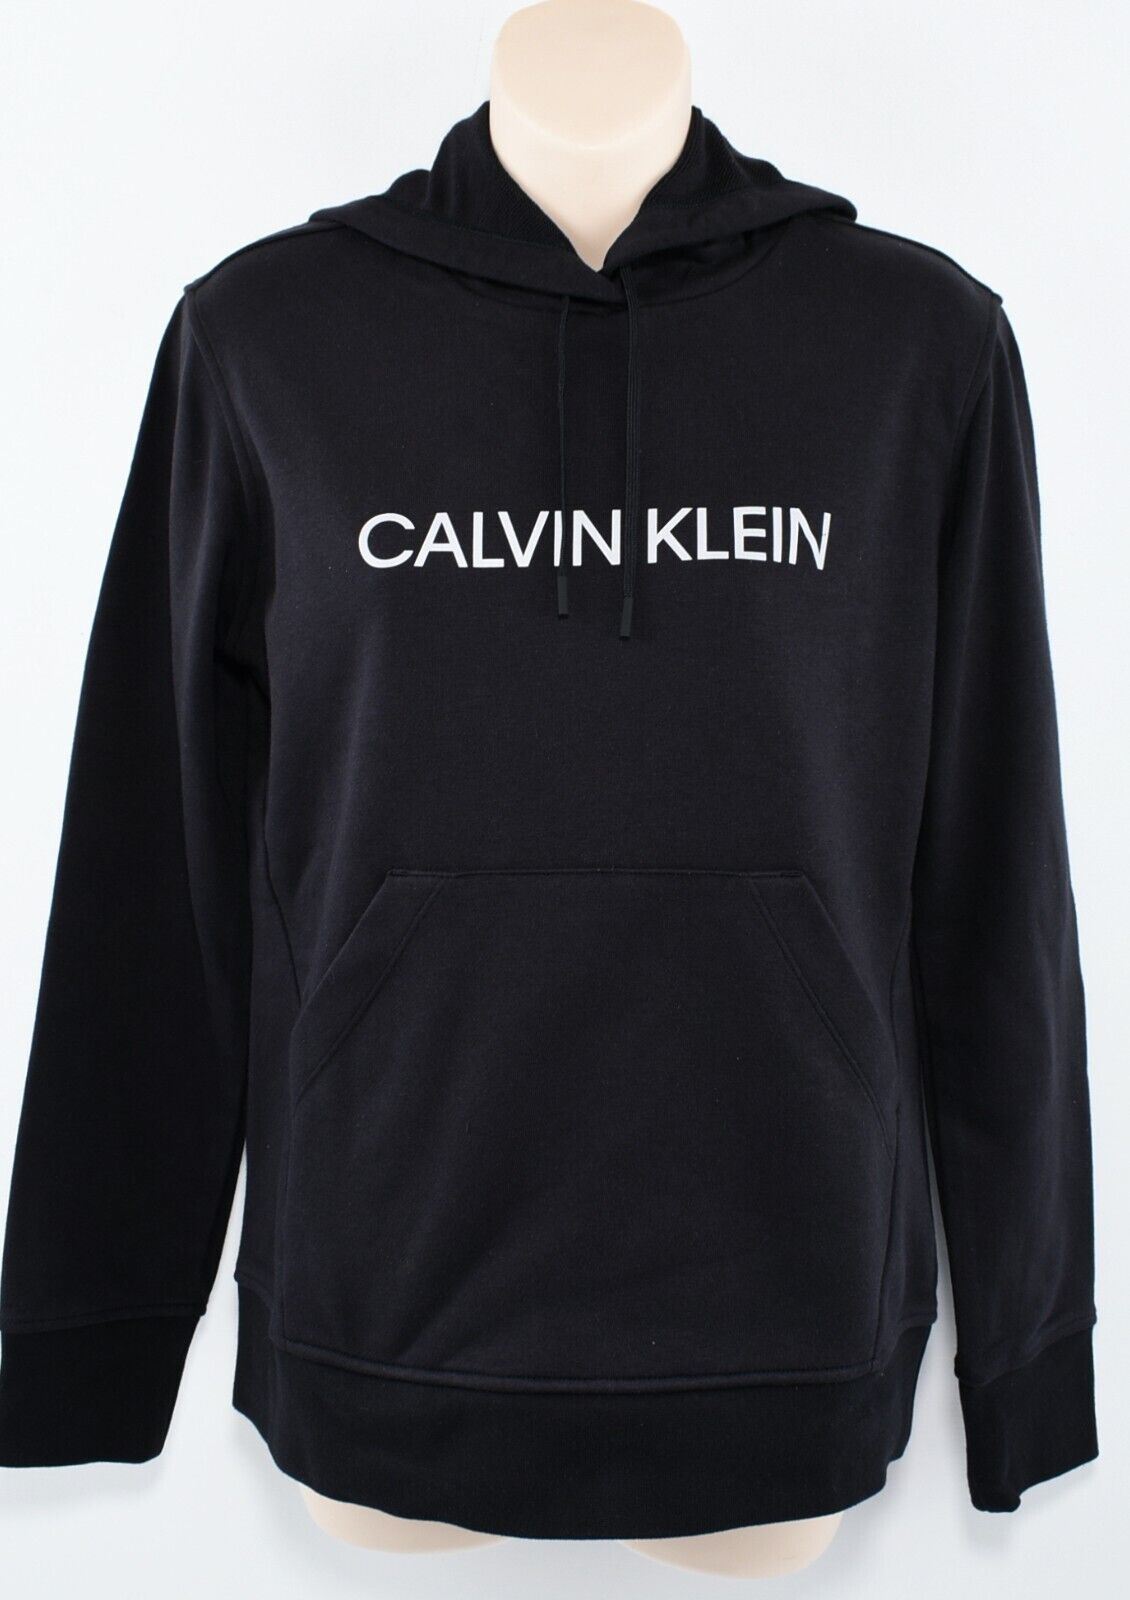 CALVIN KLEIN Performance Women's Hoodie, Hooded Sweatshirt, Black size S (UK 10)